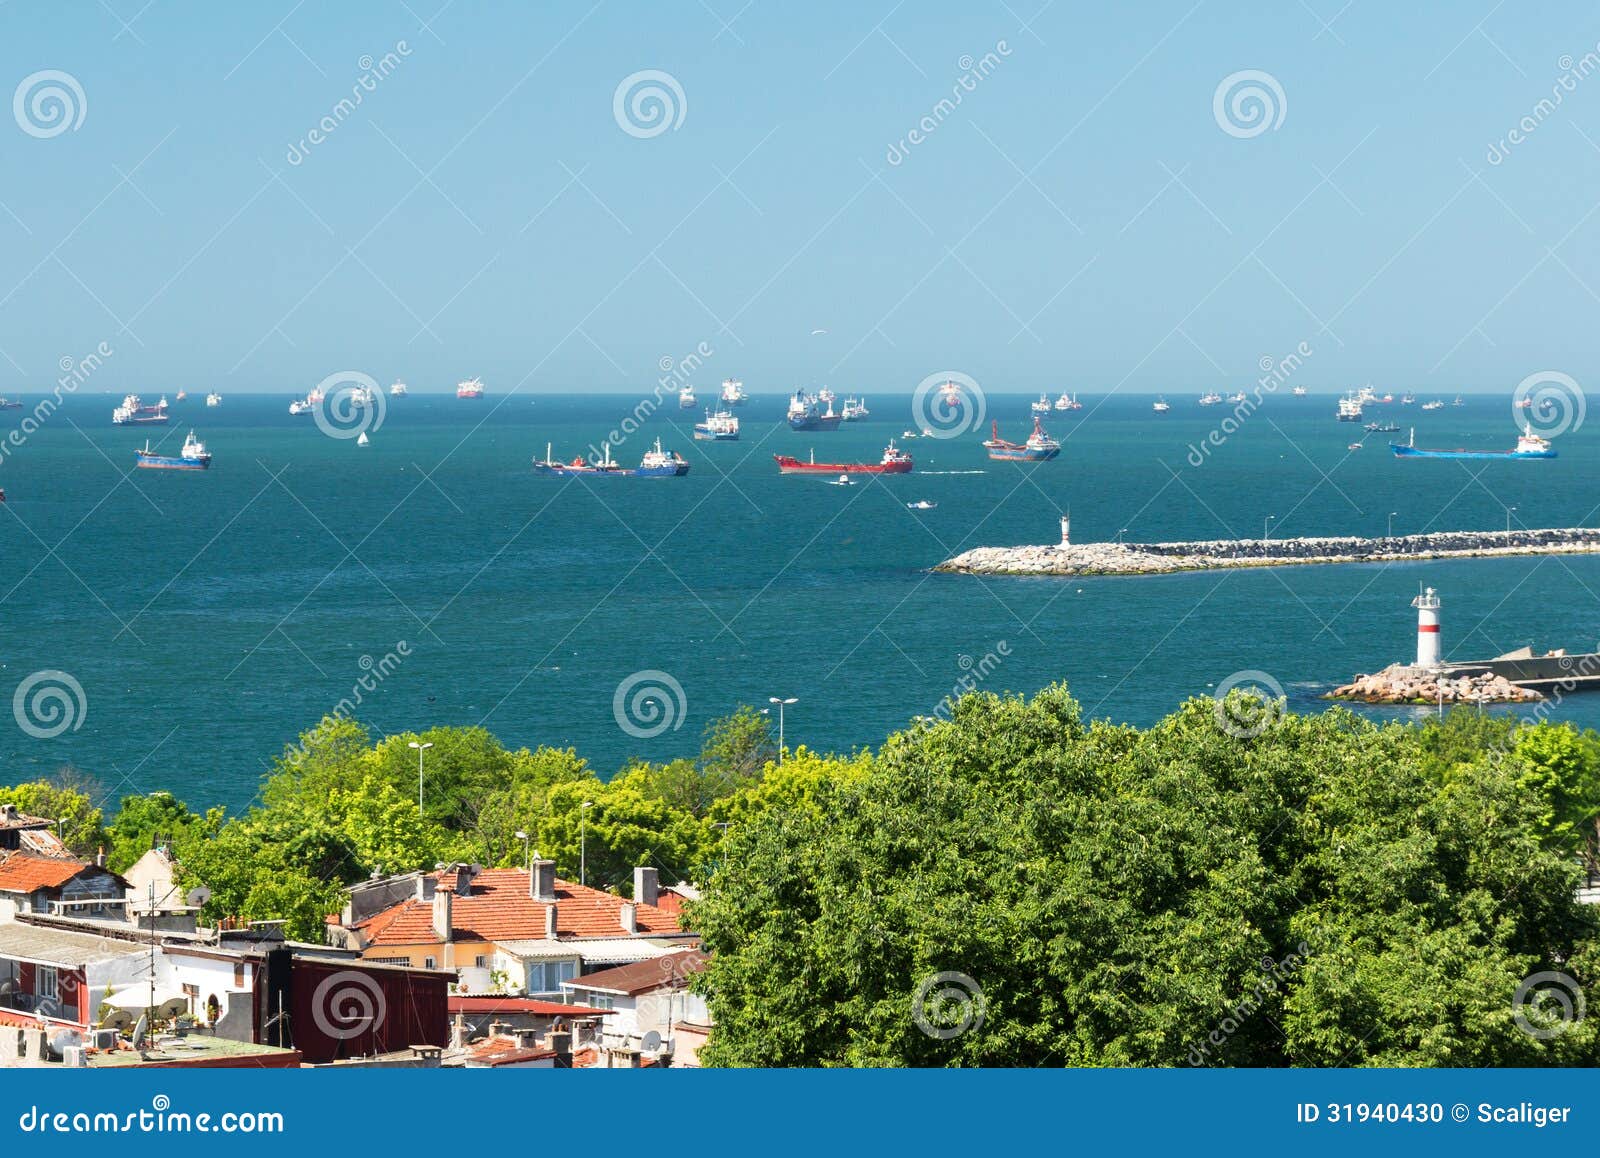 ships in the sea of Ã¢â¬â¹Ã¢â¬â¹marmara, istanbul